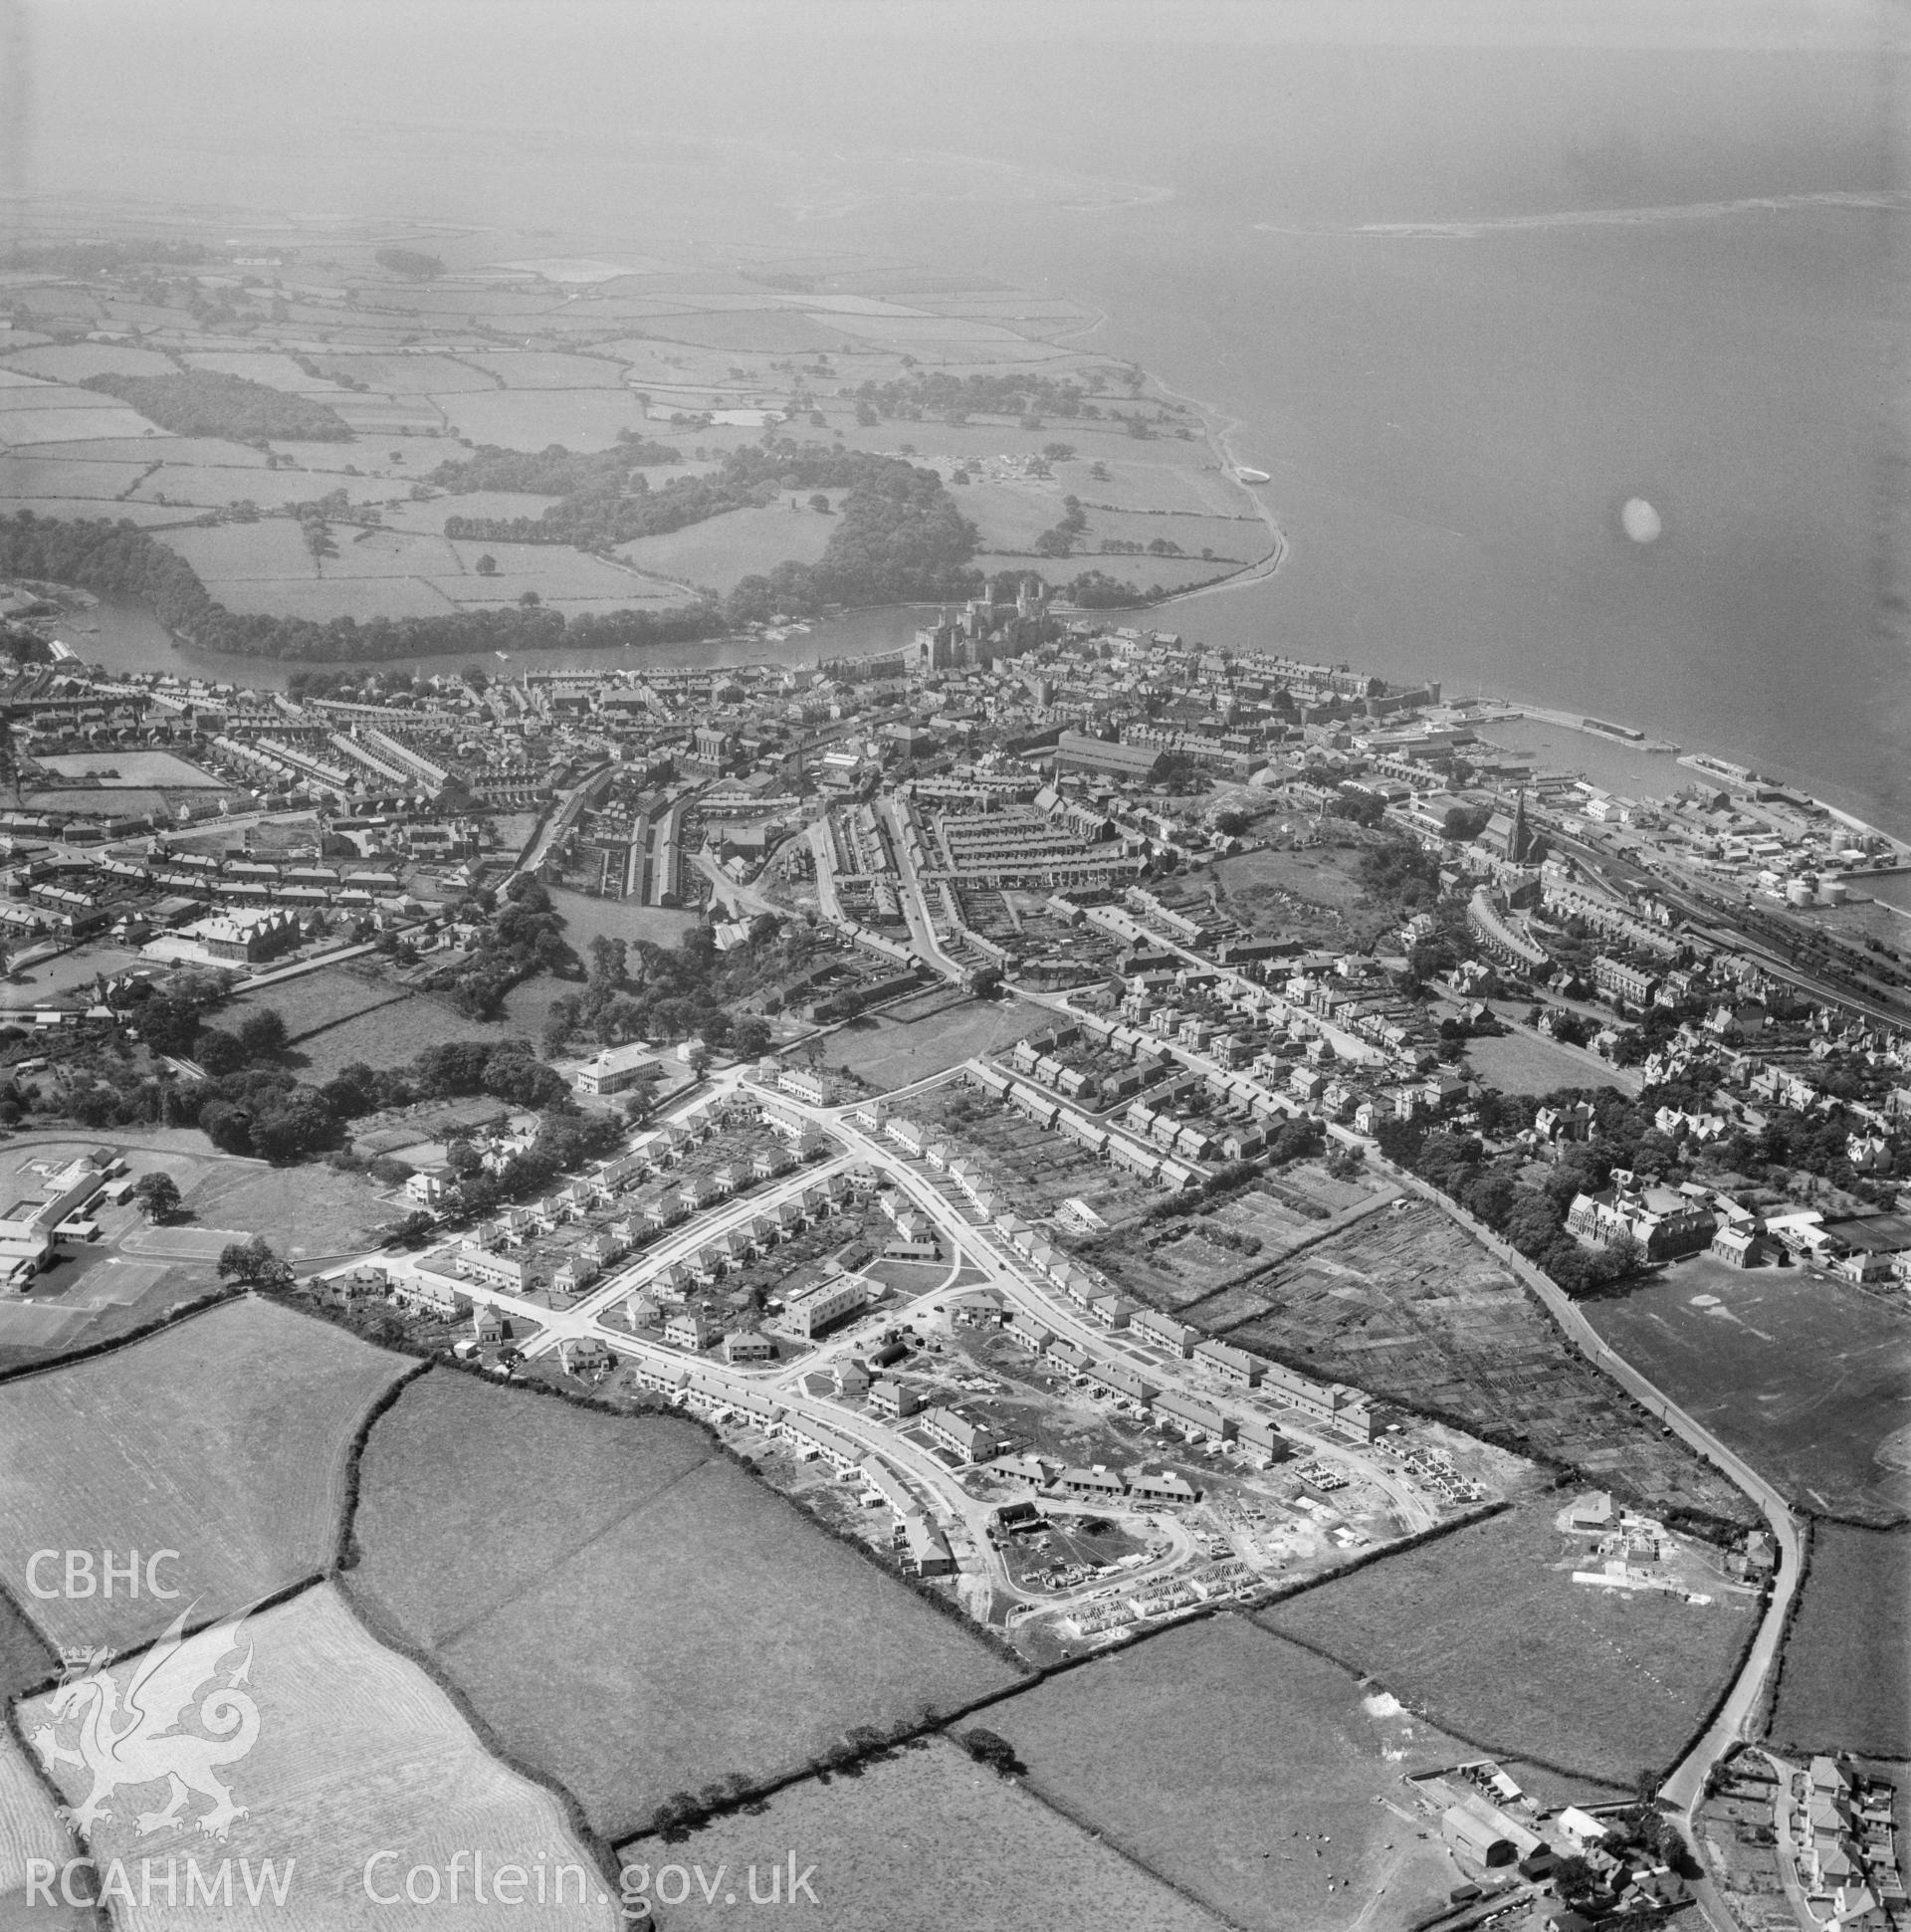 General view of Caernarfon showing new housing